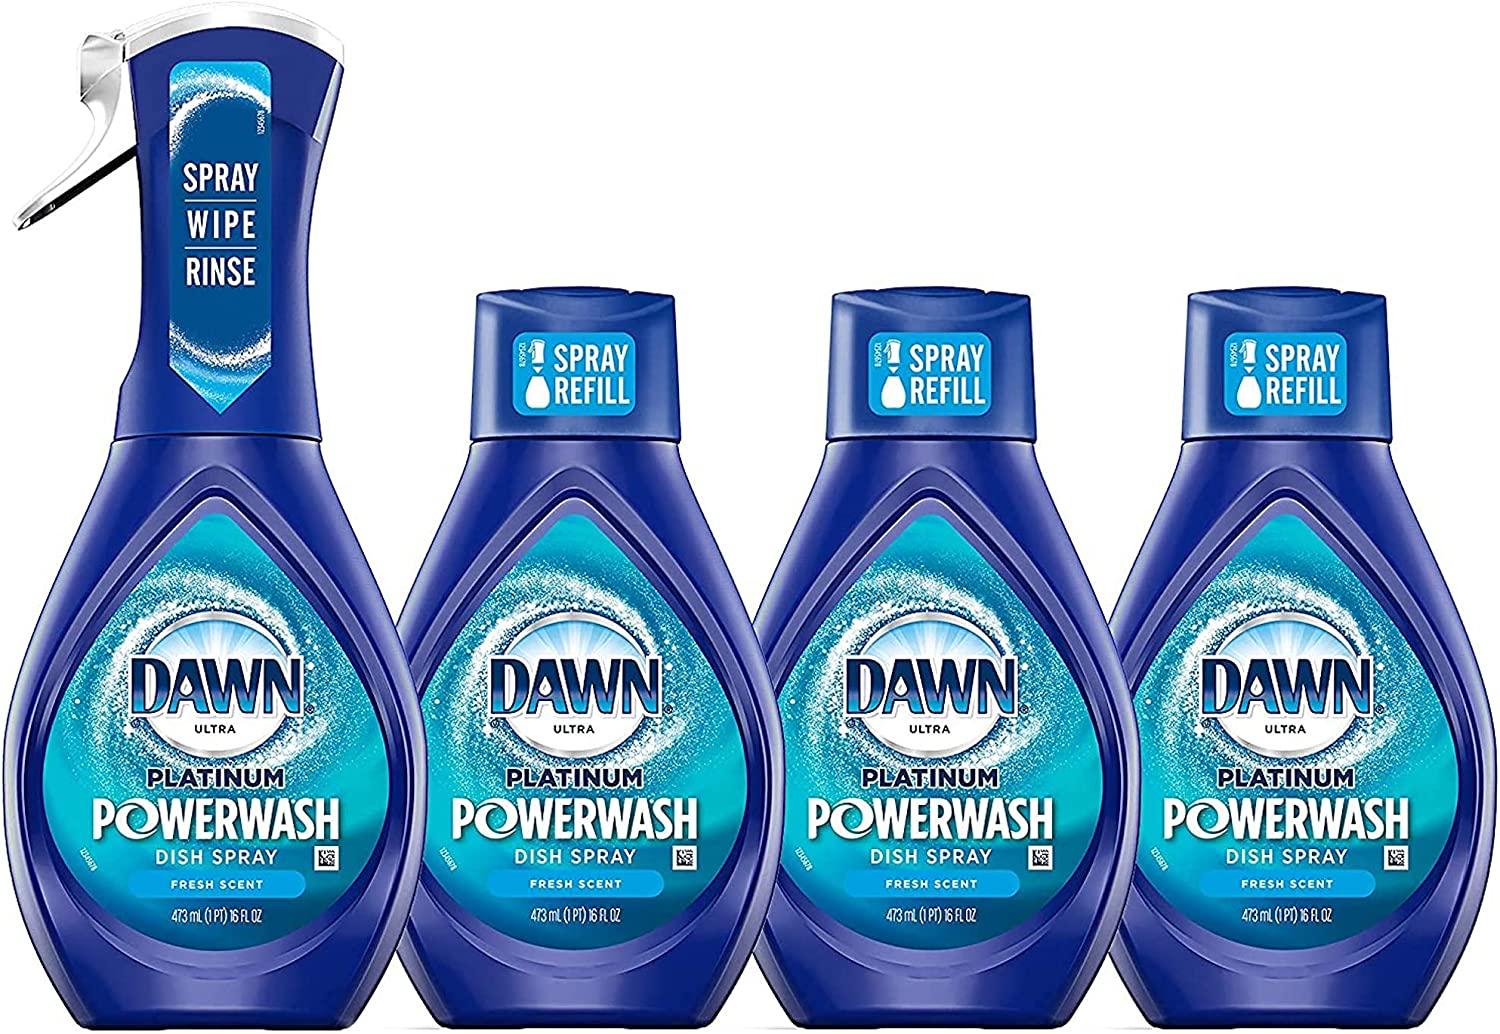 Dawn Platinum Powerwash Dish Spray, Dish Soap, Fresh Scent Bundle, 1 Spray (16oz) + 3 Refills (16oz each)(Pack of 4)